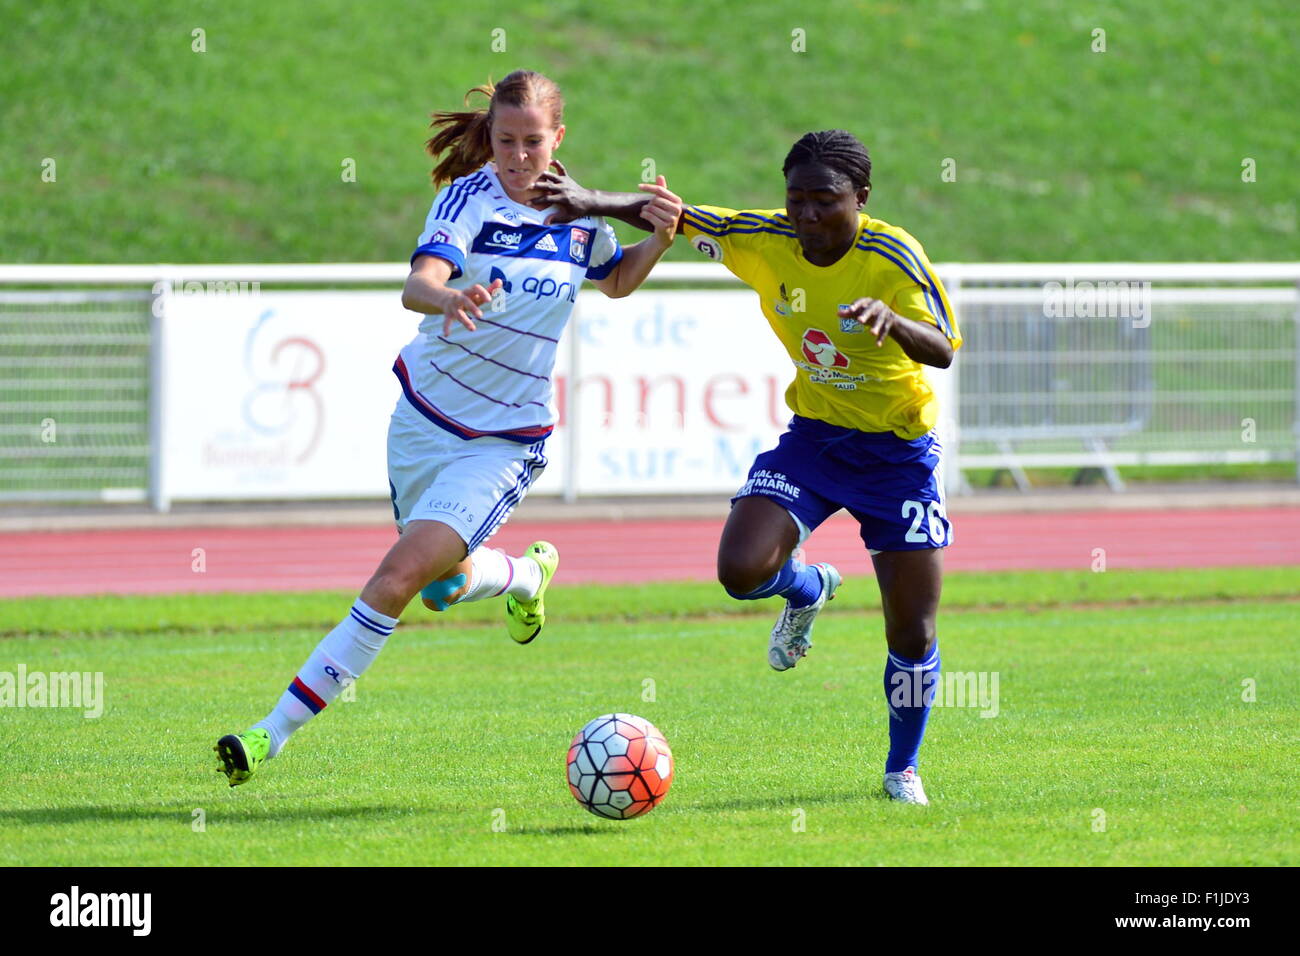 Lotta SCHELIN/ZOUGA - 30.08.2015 - VGA Saint Maur/Lyon - 1eme journee de 1er Division feminine.Photo : Dave Winter/Icon Sport Stock Photo